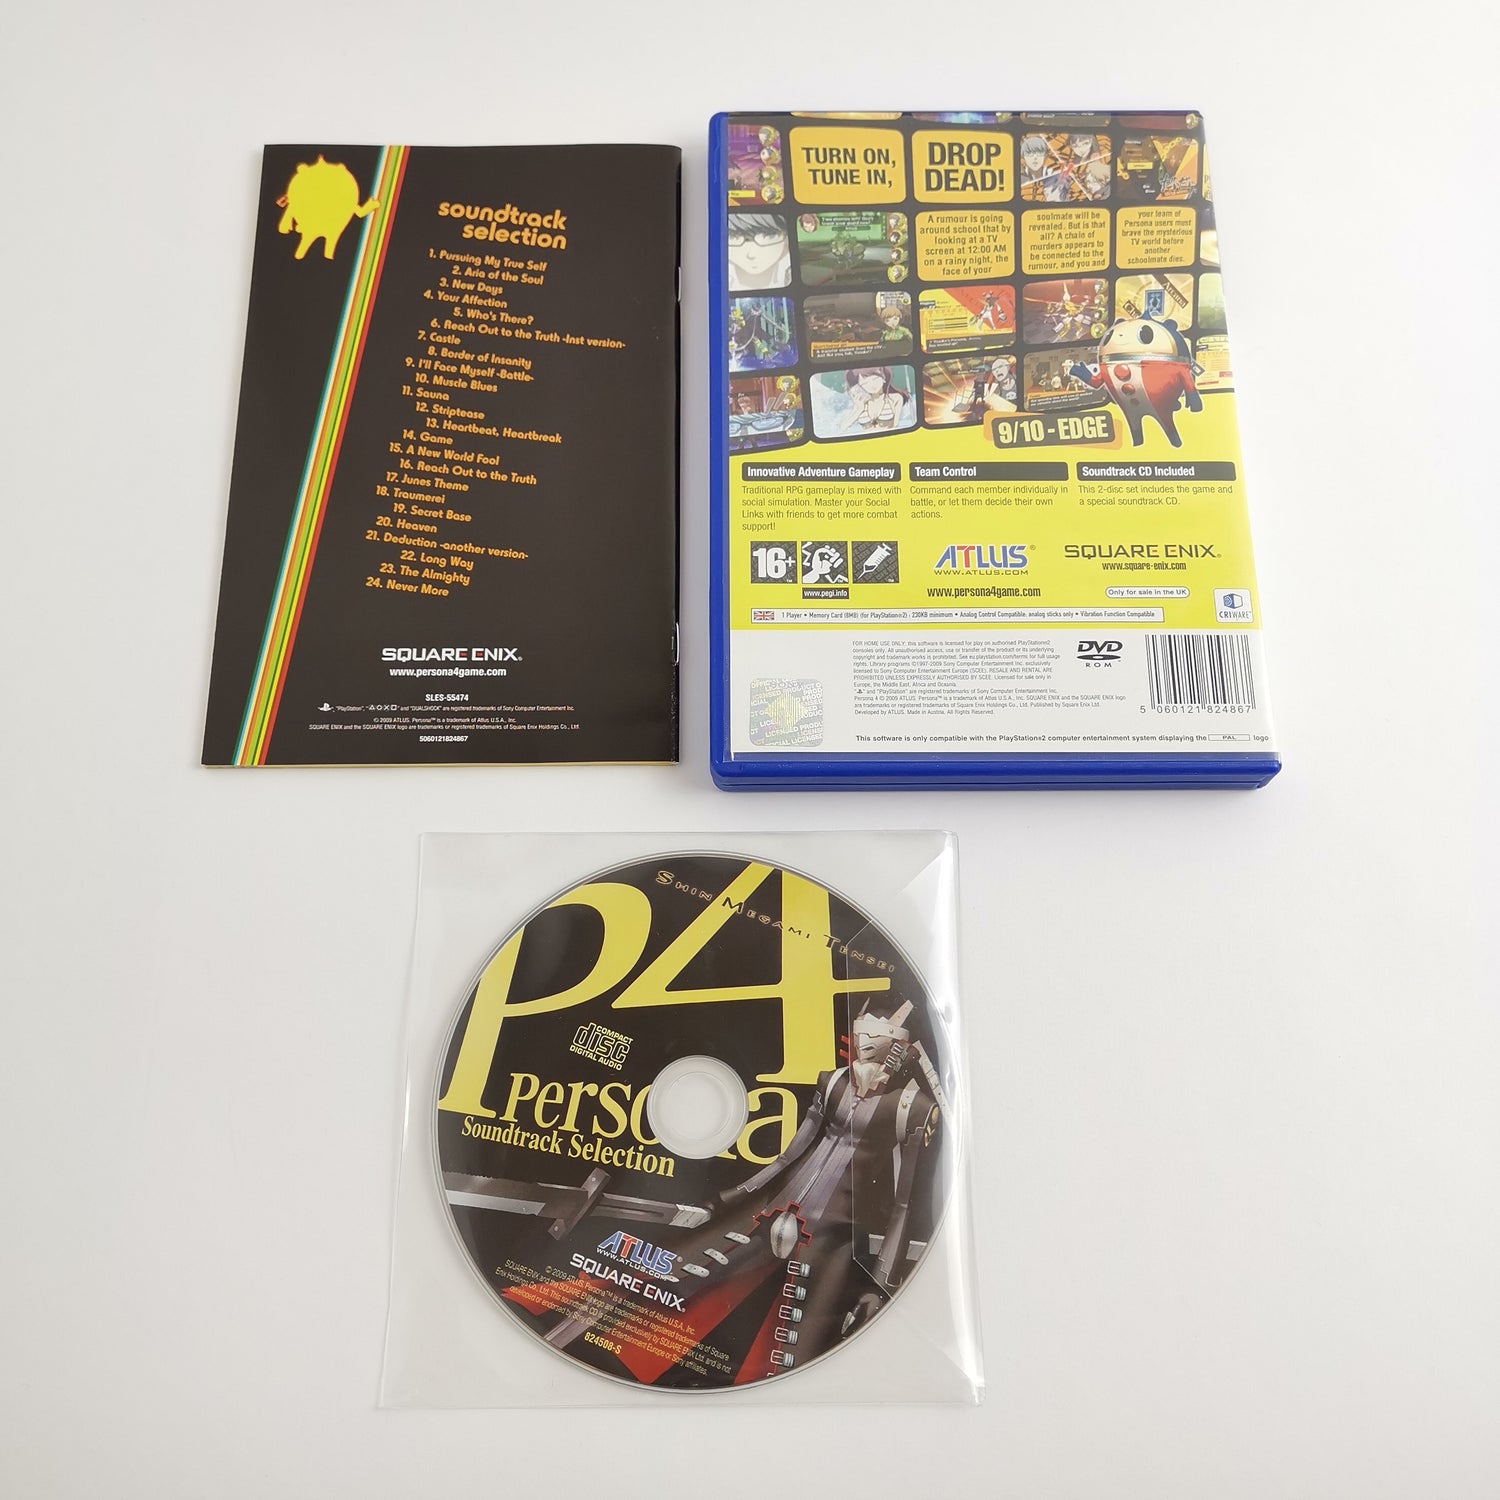 Sony Playstation 2 Game: Shin Megami Tensei P4 Persona 4 + Sound Track CD - PS2